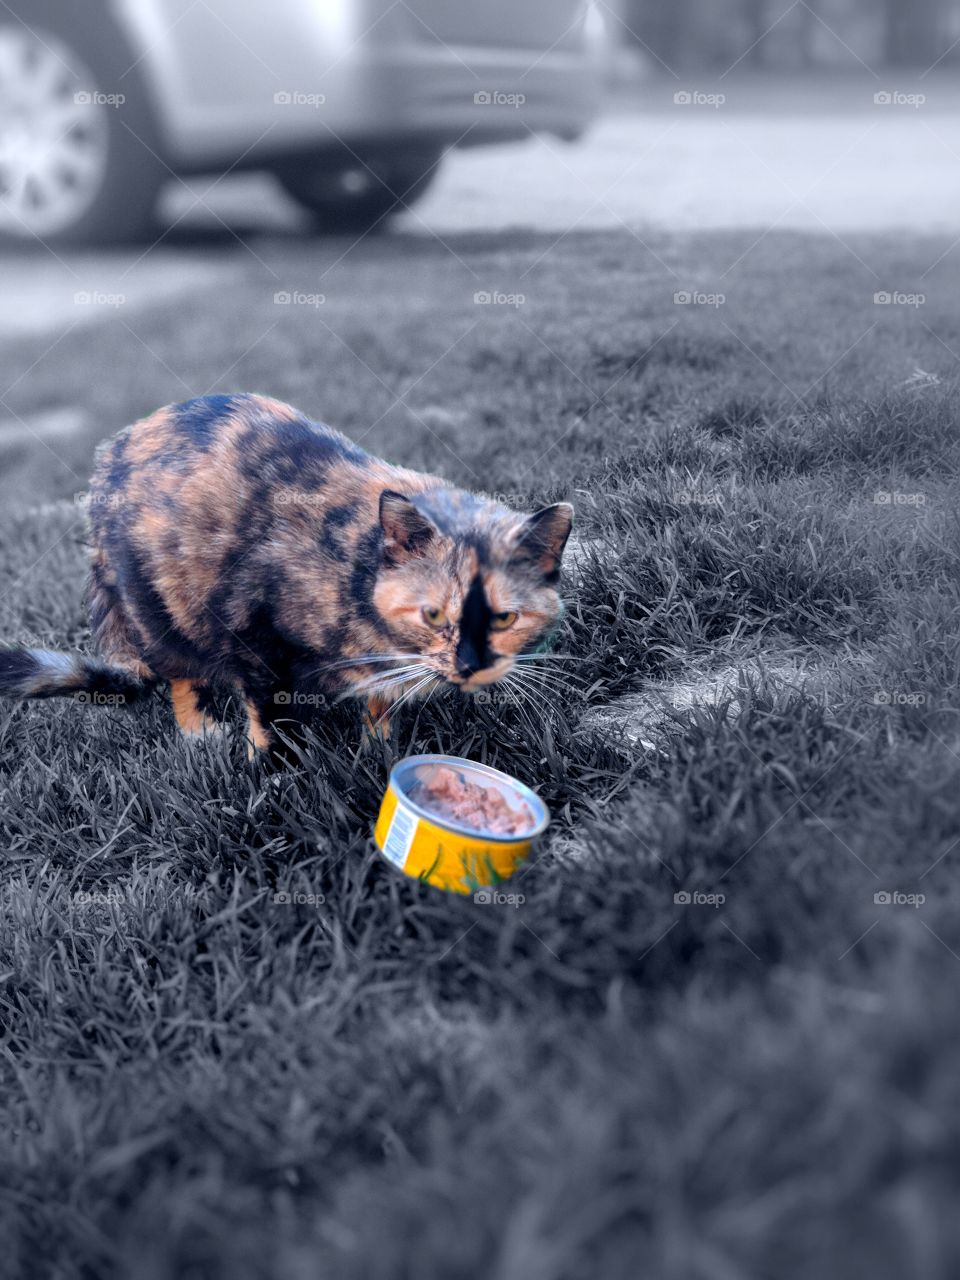 Calico cat outside eating